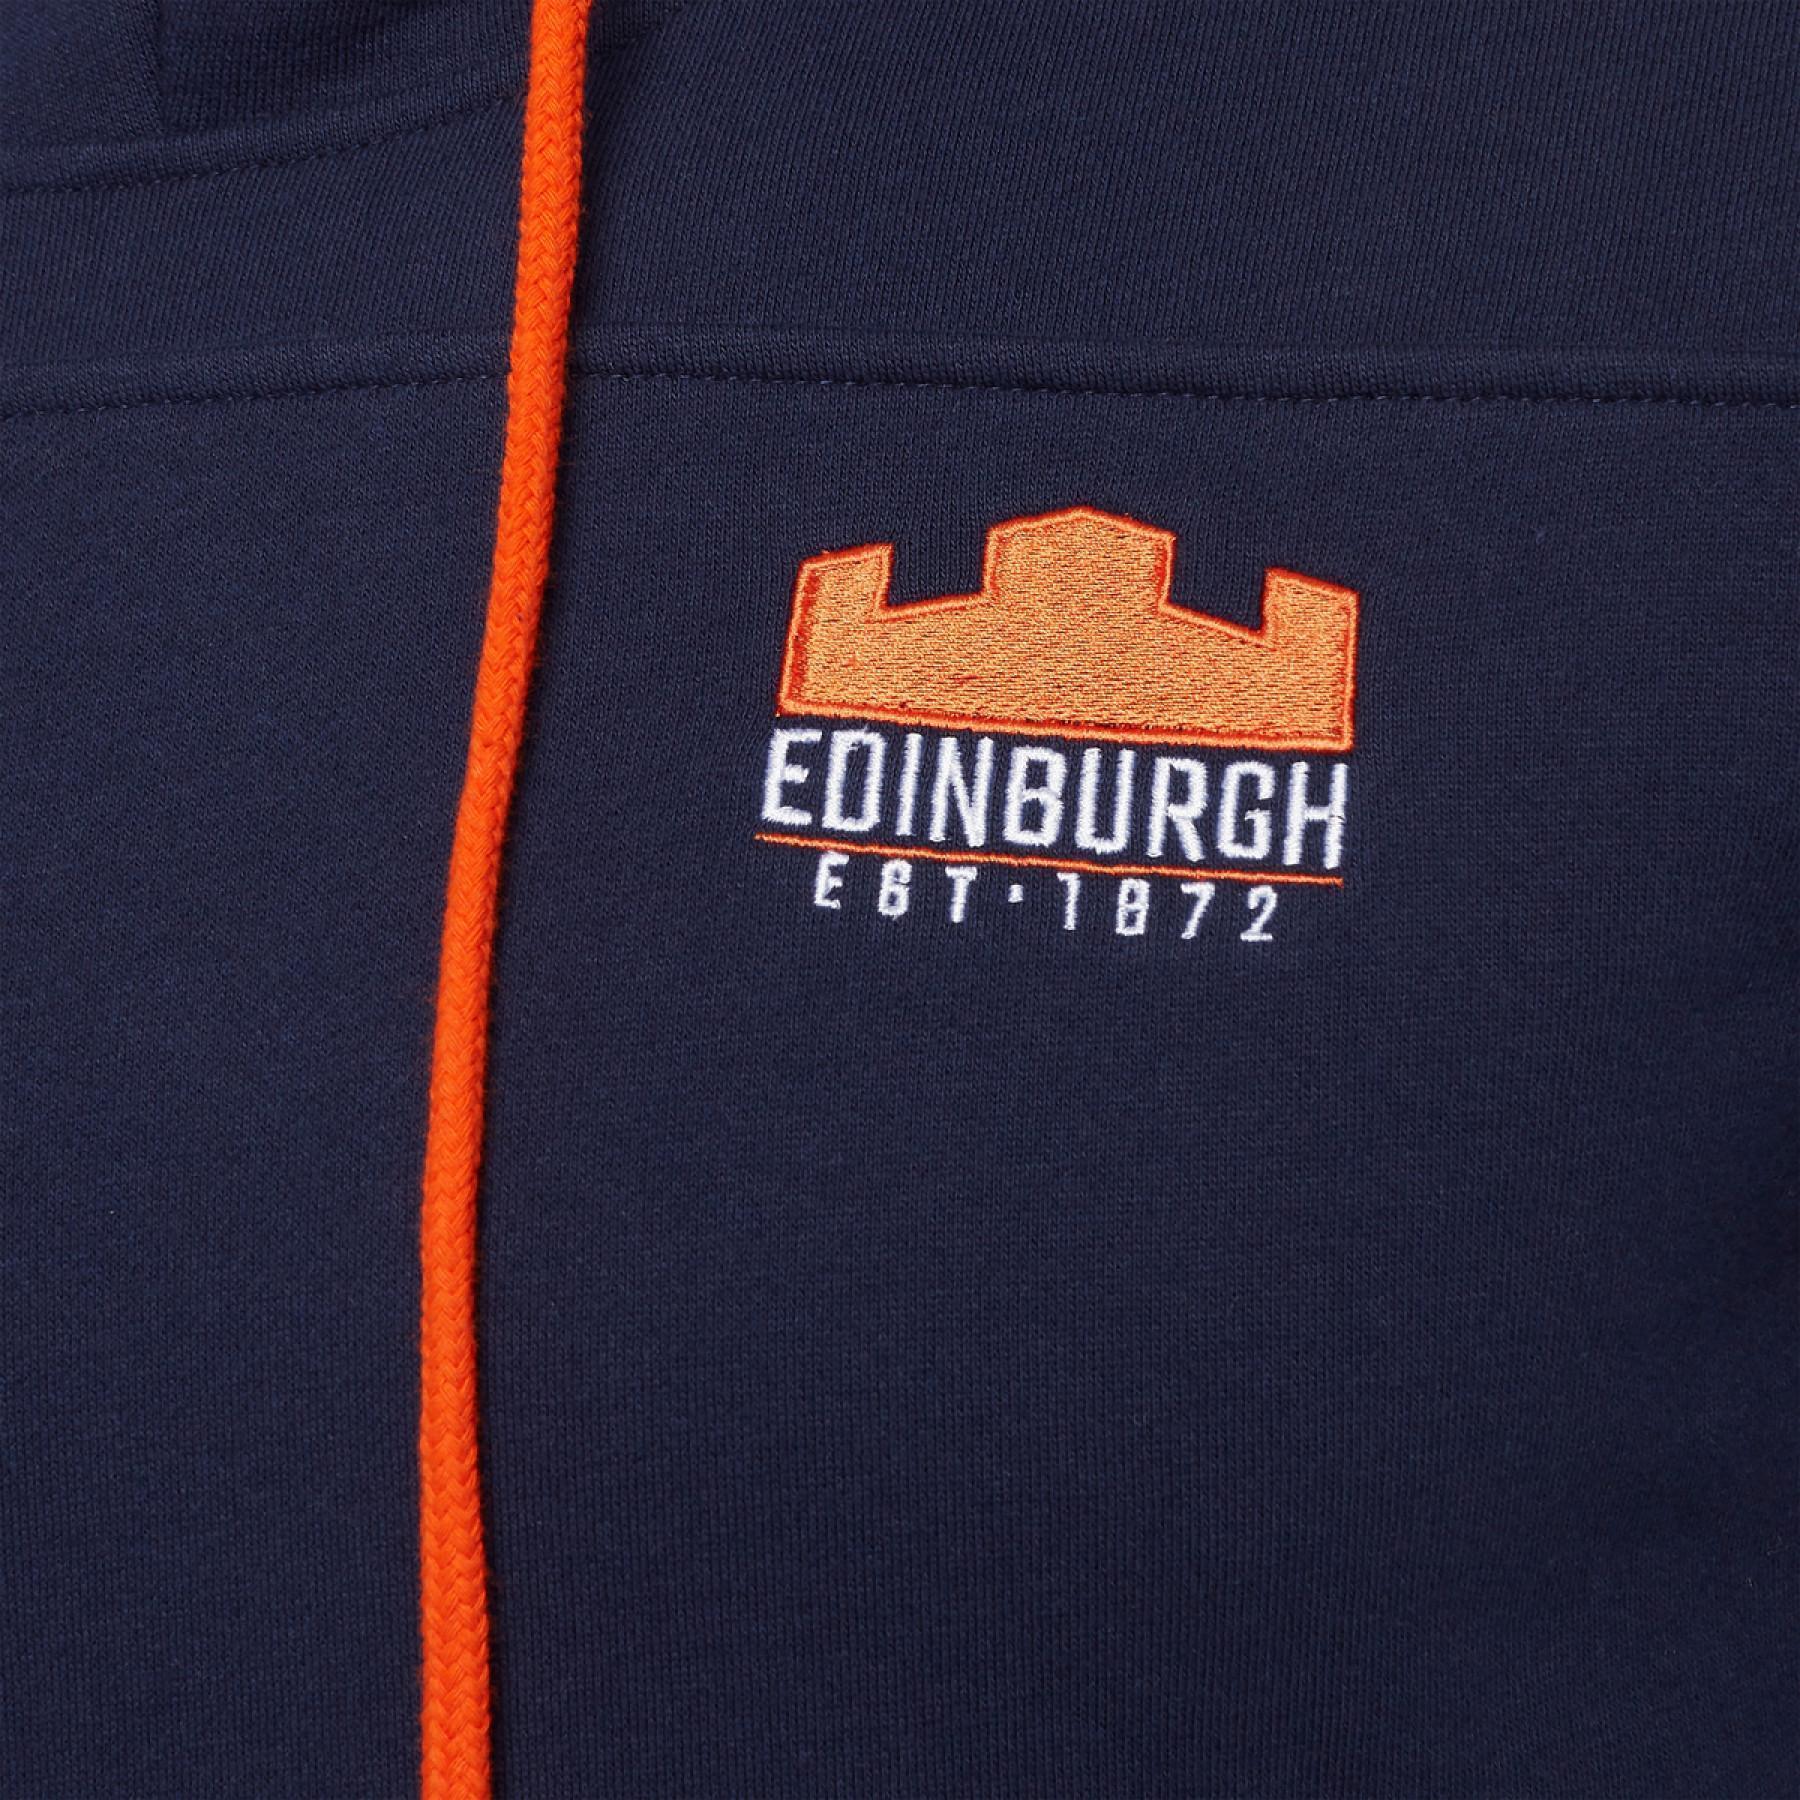 Katoenen reissweater Edinburgh rugby 2020/21